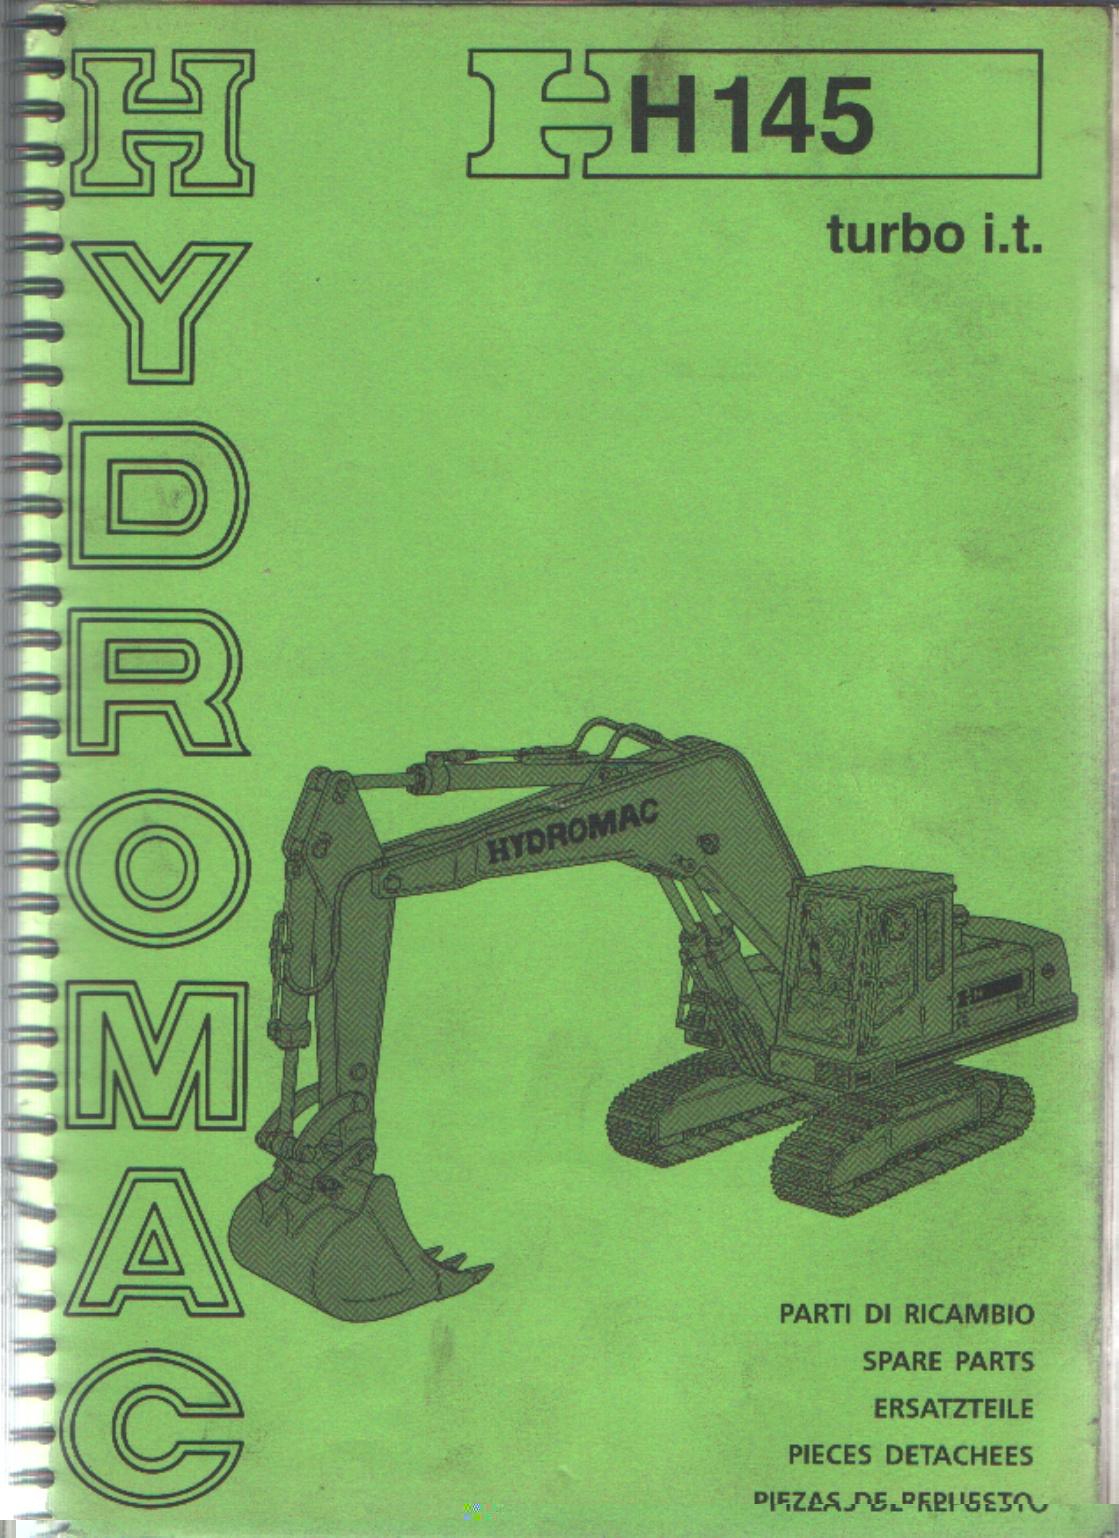 hydromac catalogo ricambi H145 turbo i.t.